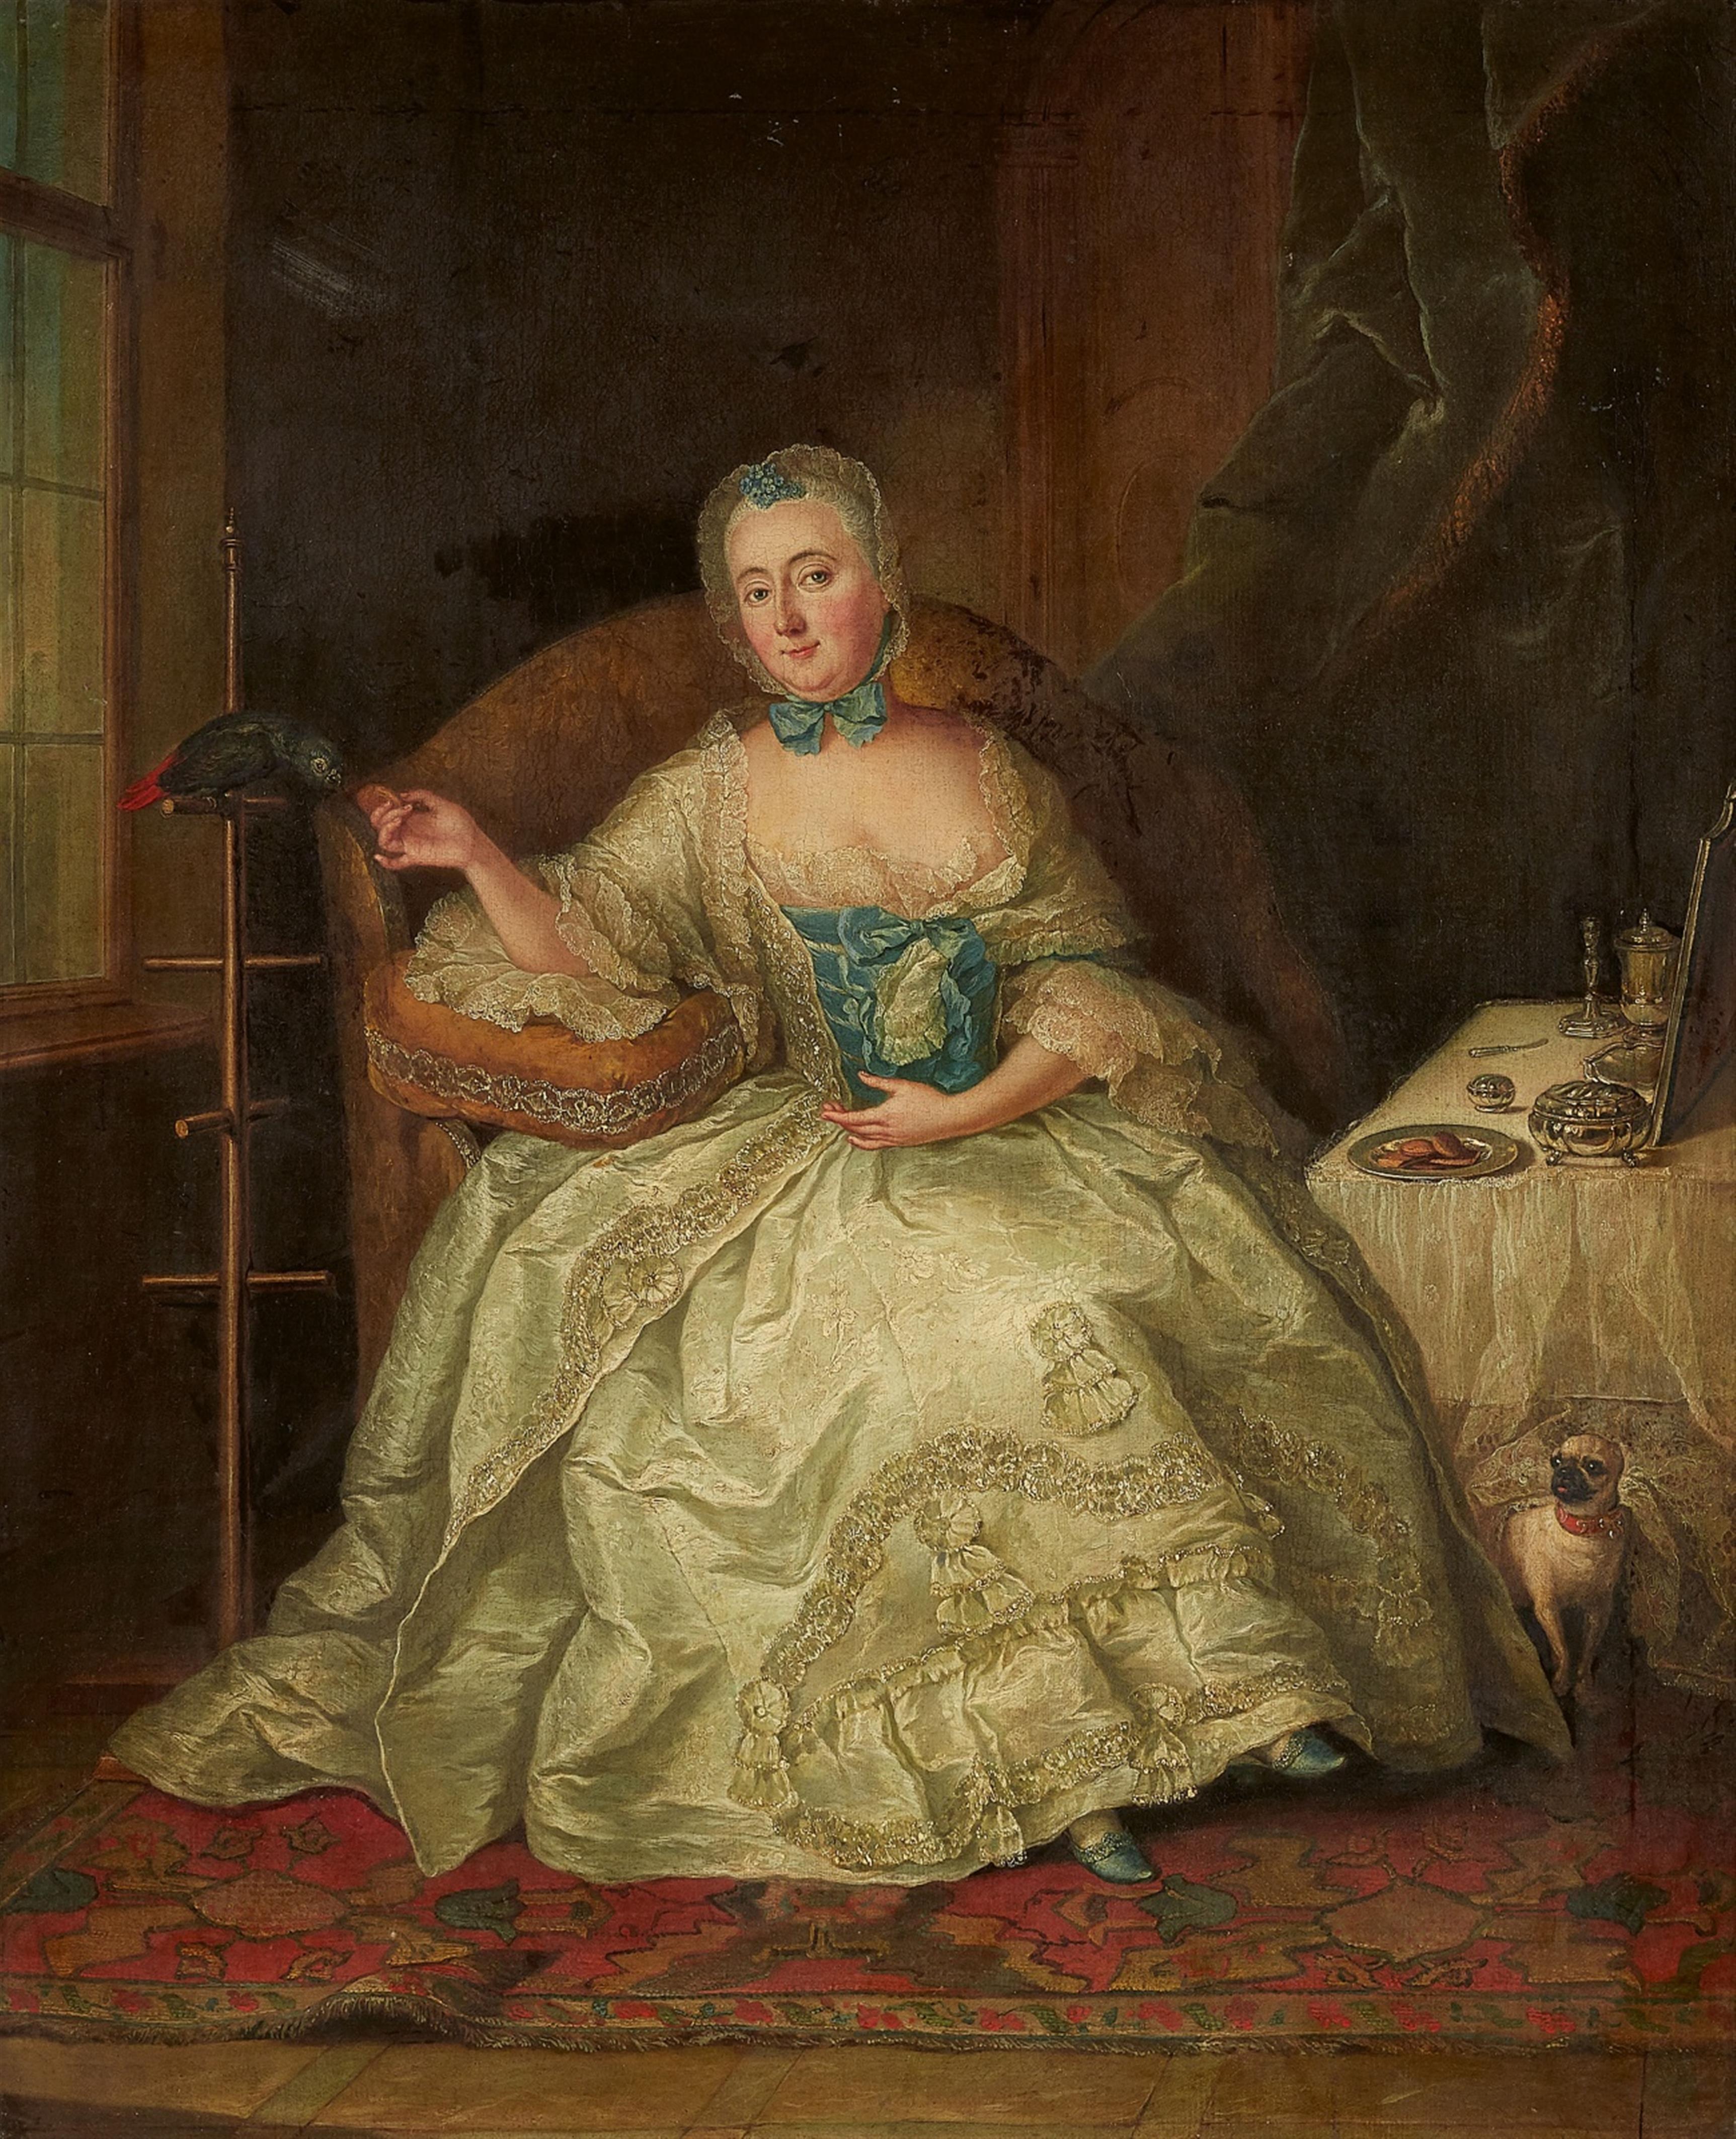 David Matthieu, attributed to
Barbara Rosina Lisiewska-de Gasc, attributed to - Portrait of Duchess Helene Christiane Truchsess von Waldburg - image-1